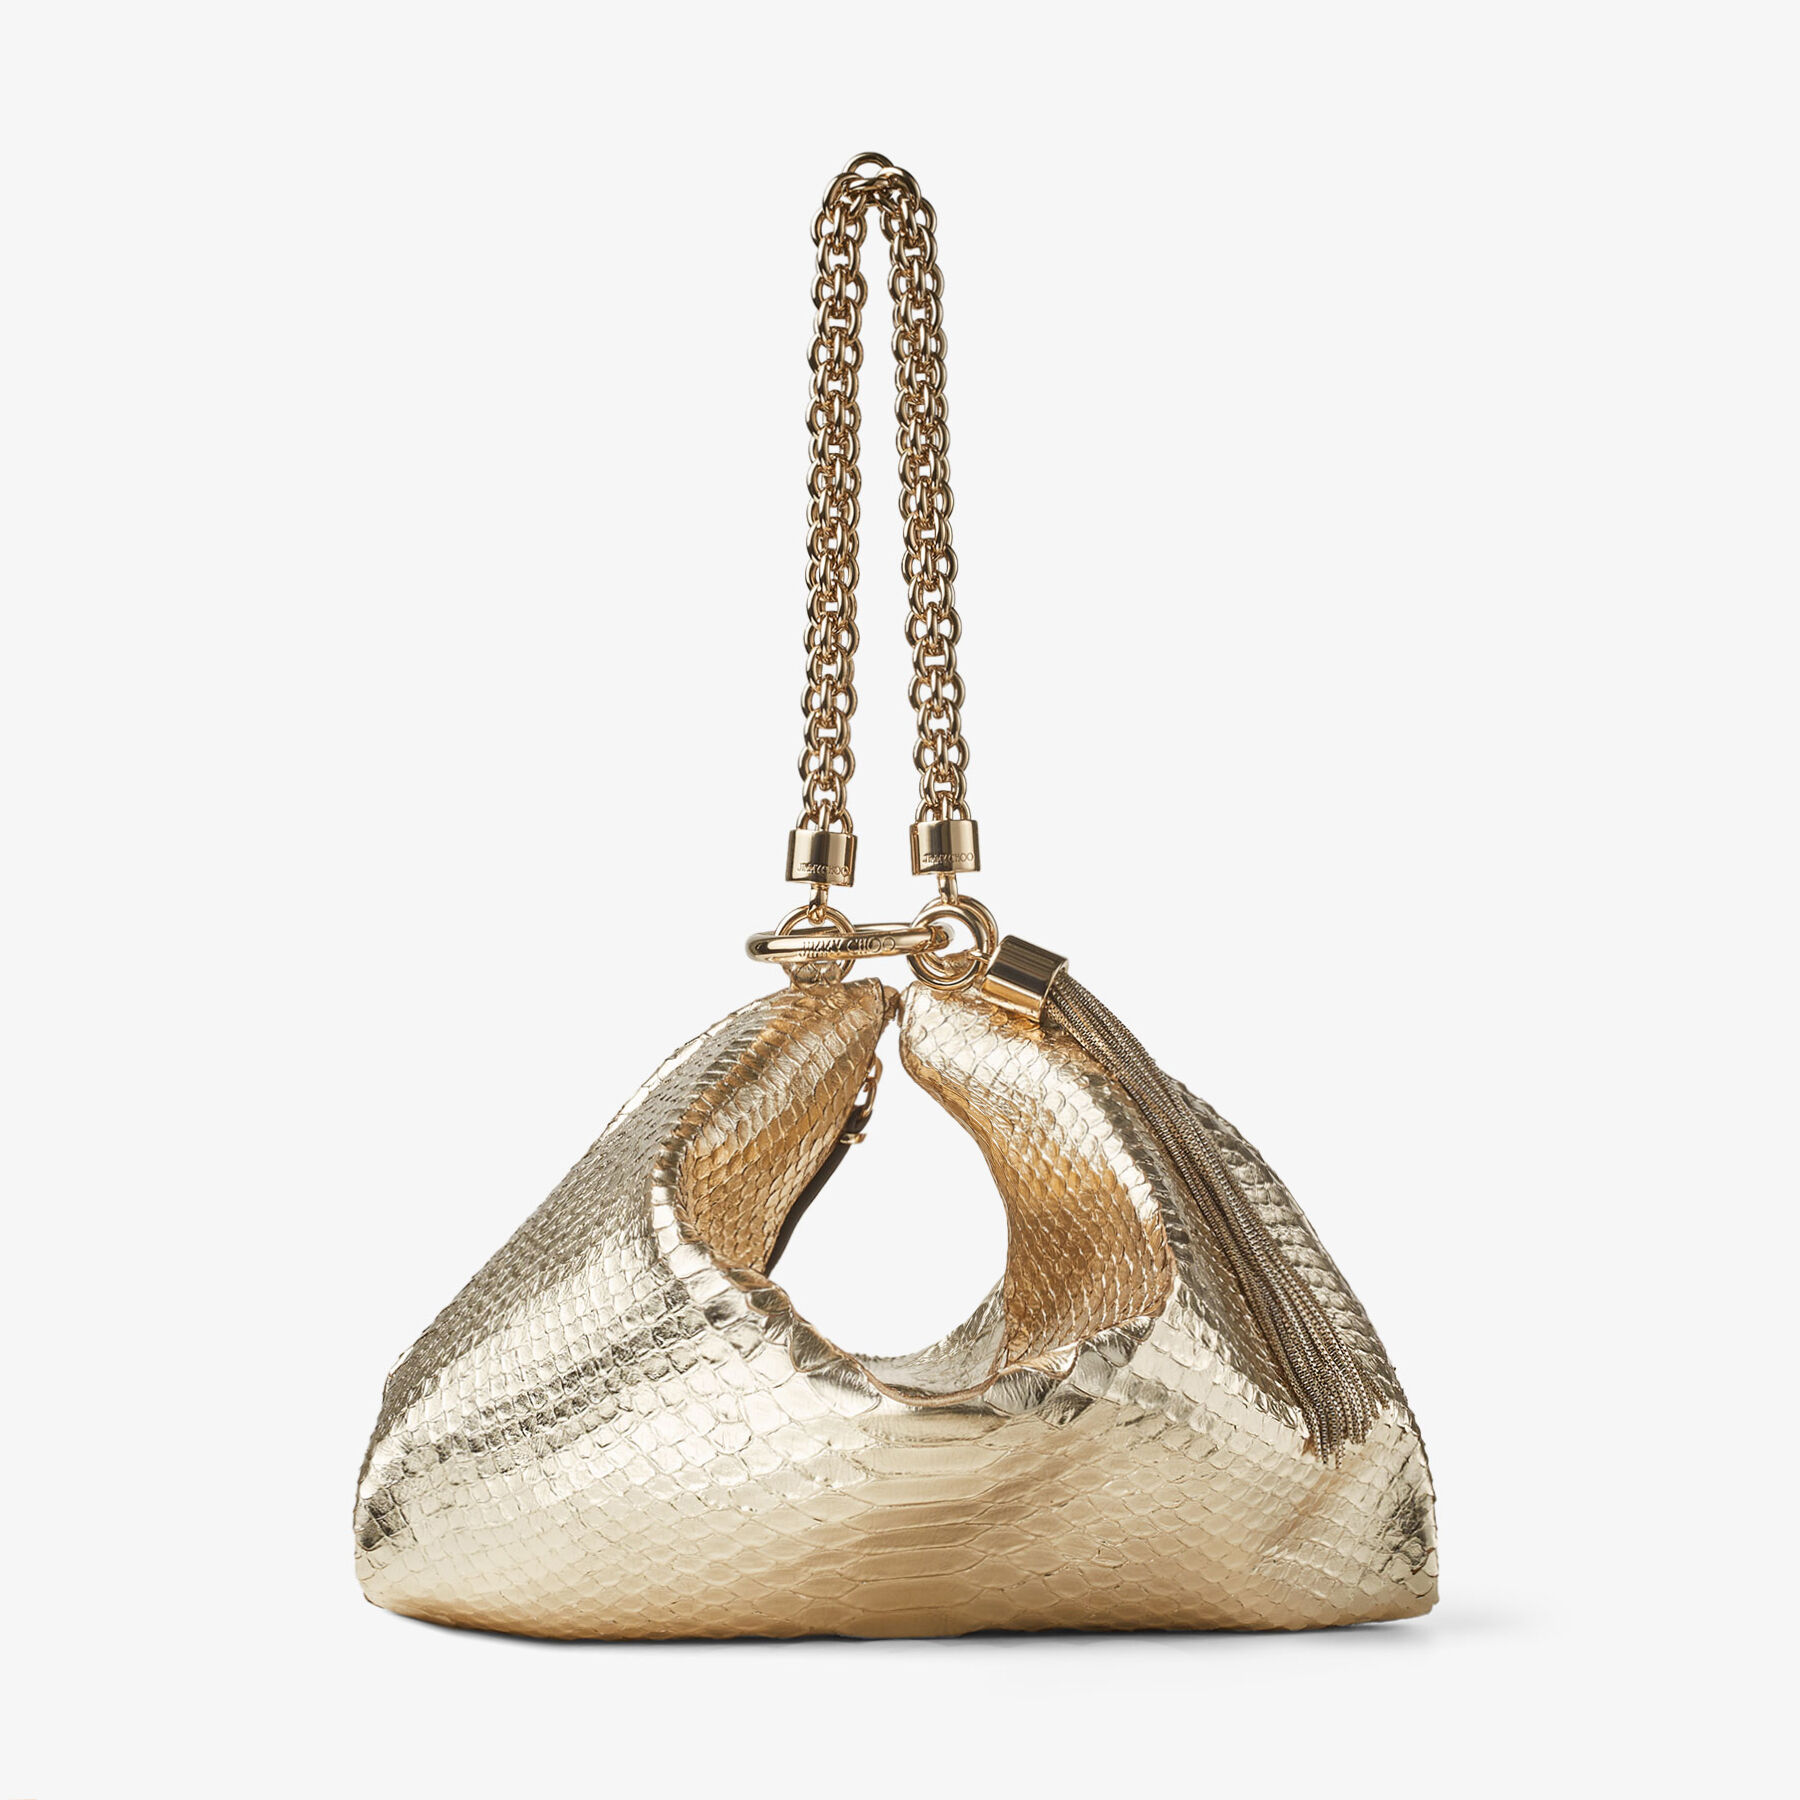 CALLIE |Champagne Metallic Snake Printed Leather Clutch Bag | New ...